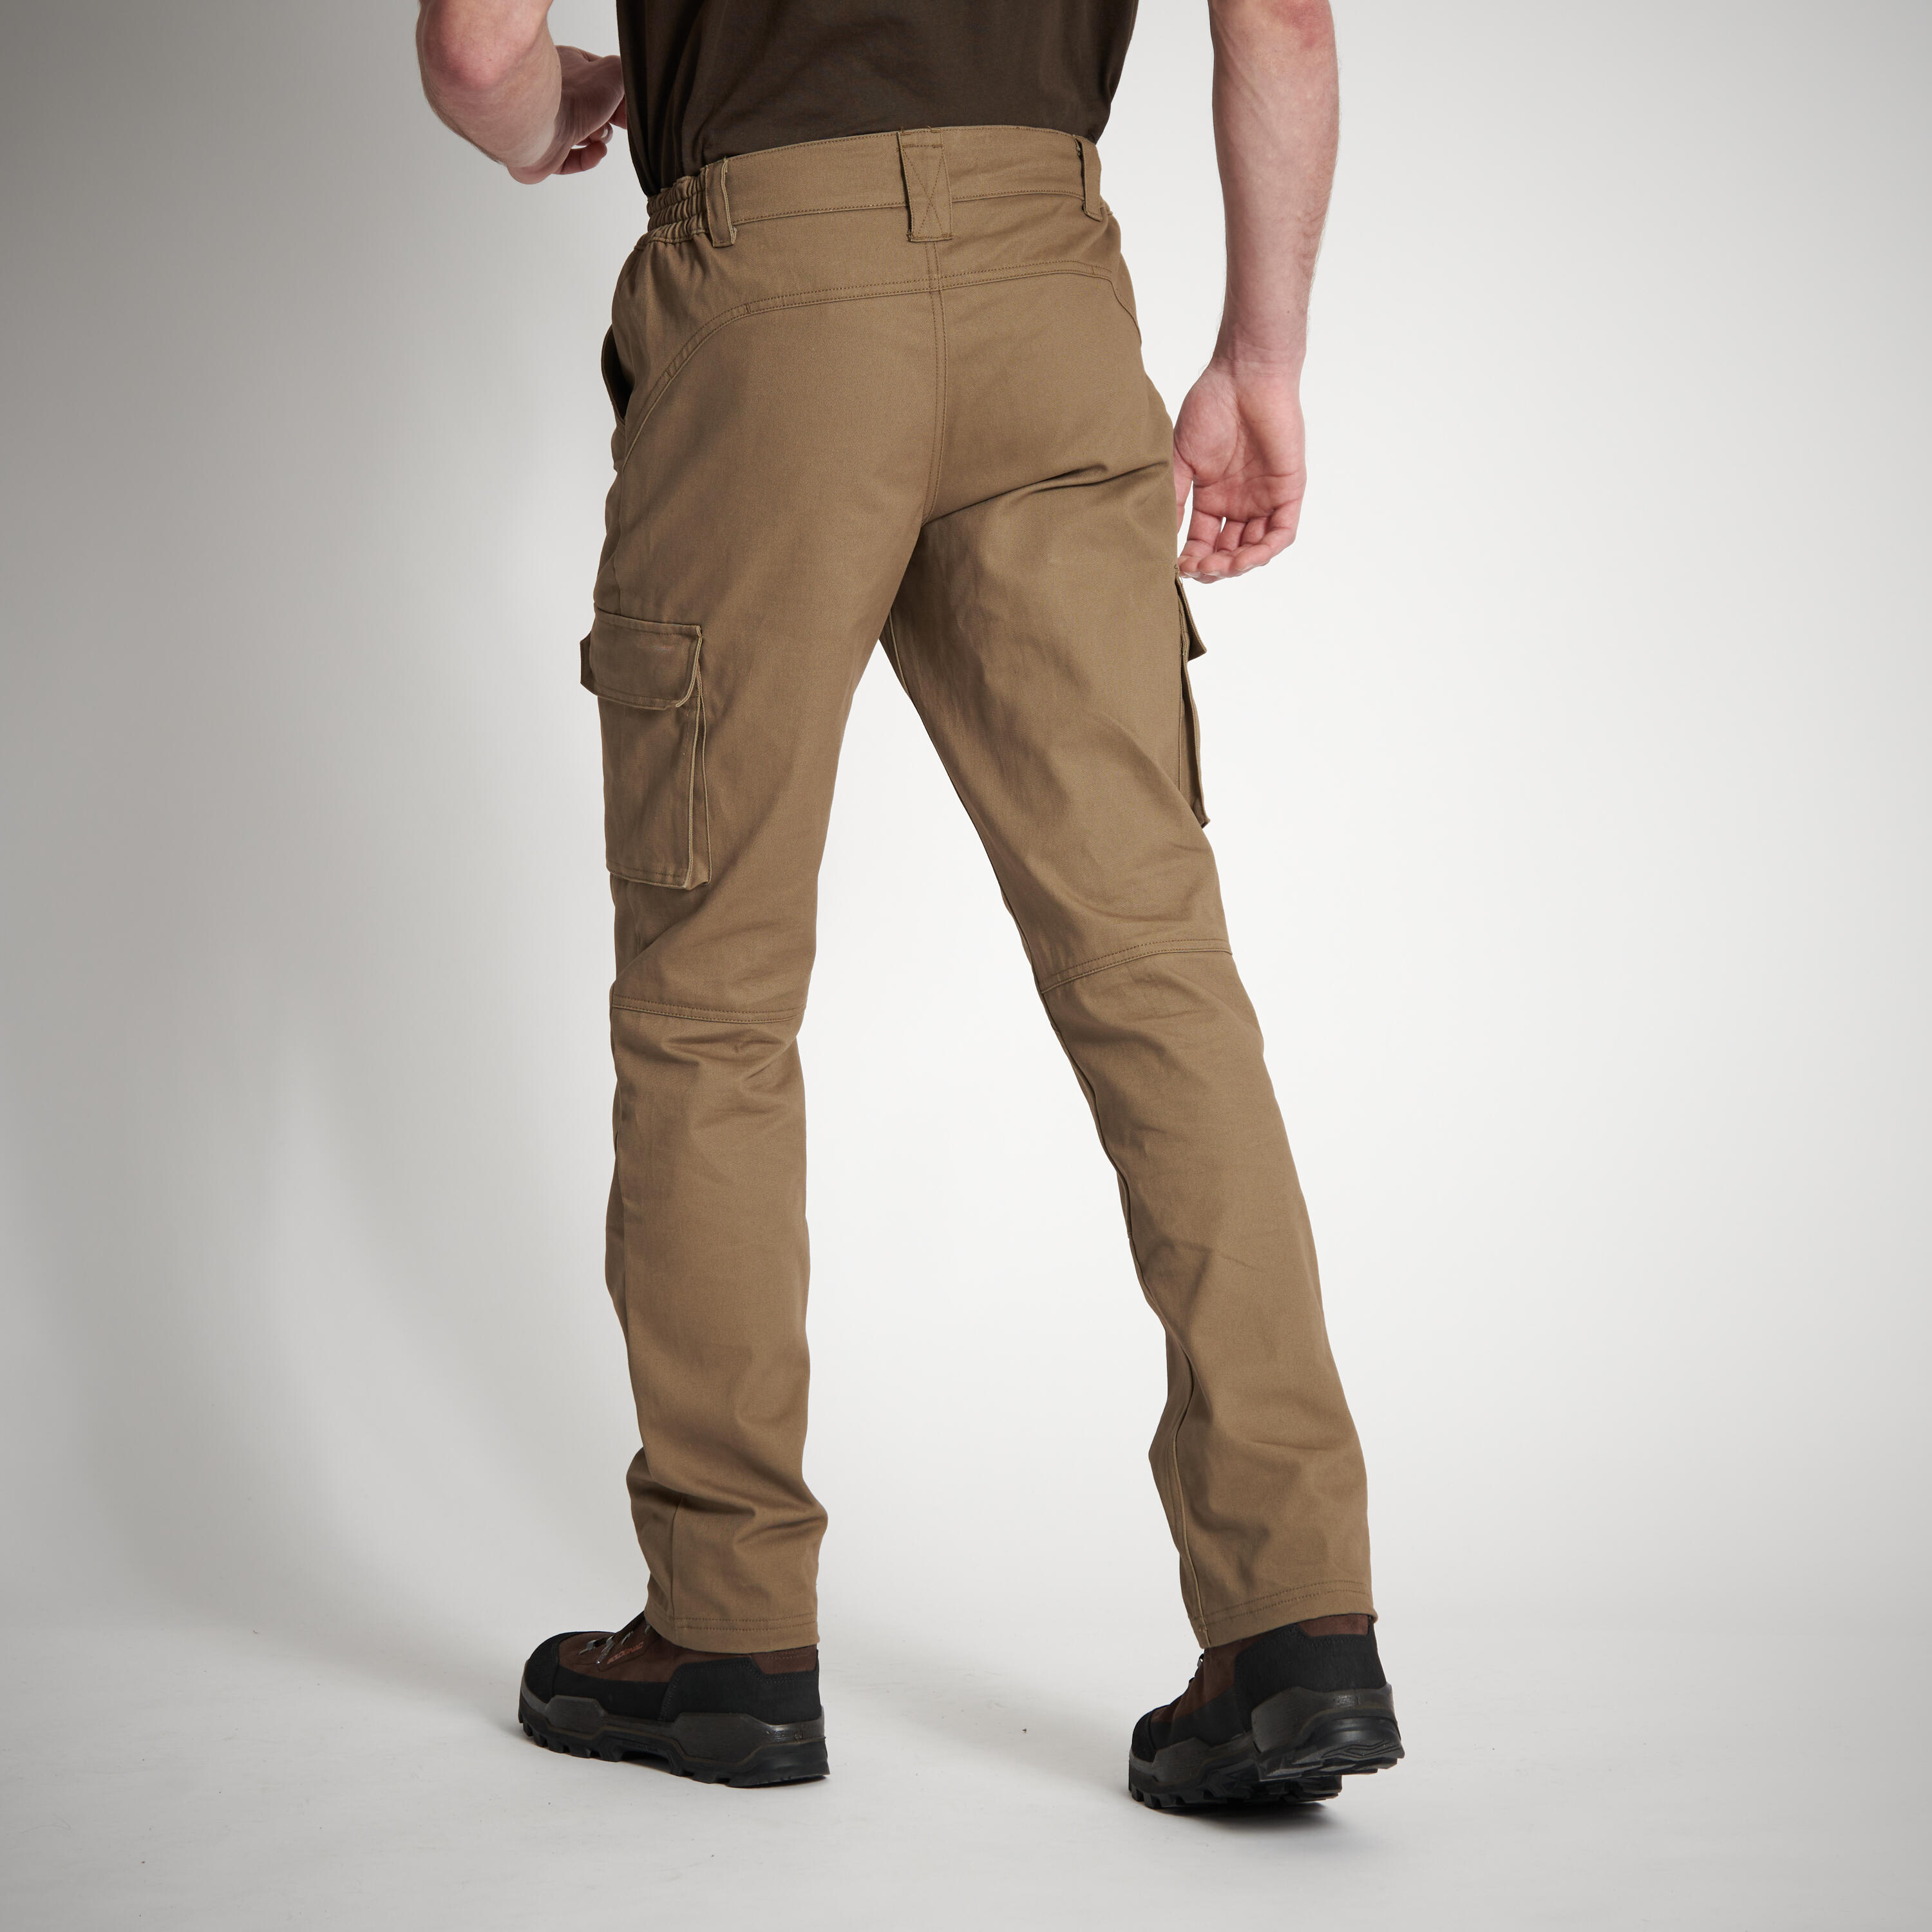 Durable Camouflage Trousers - Khaki 2/8